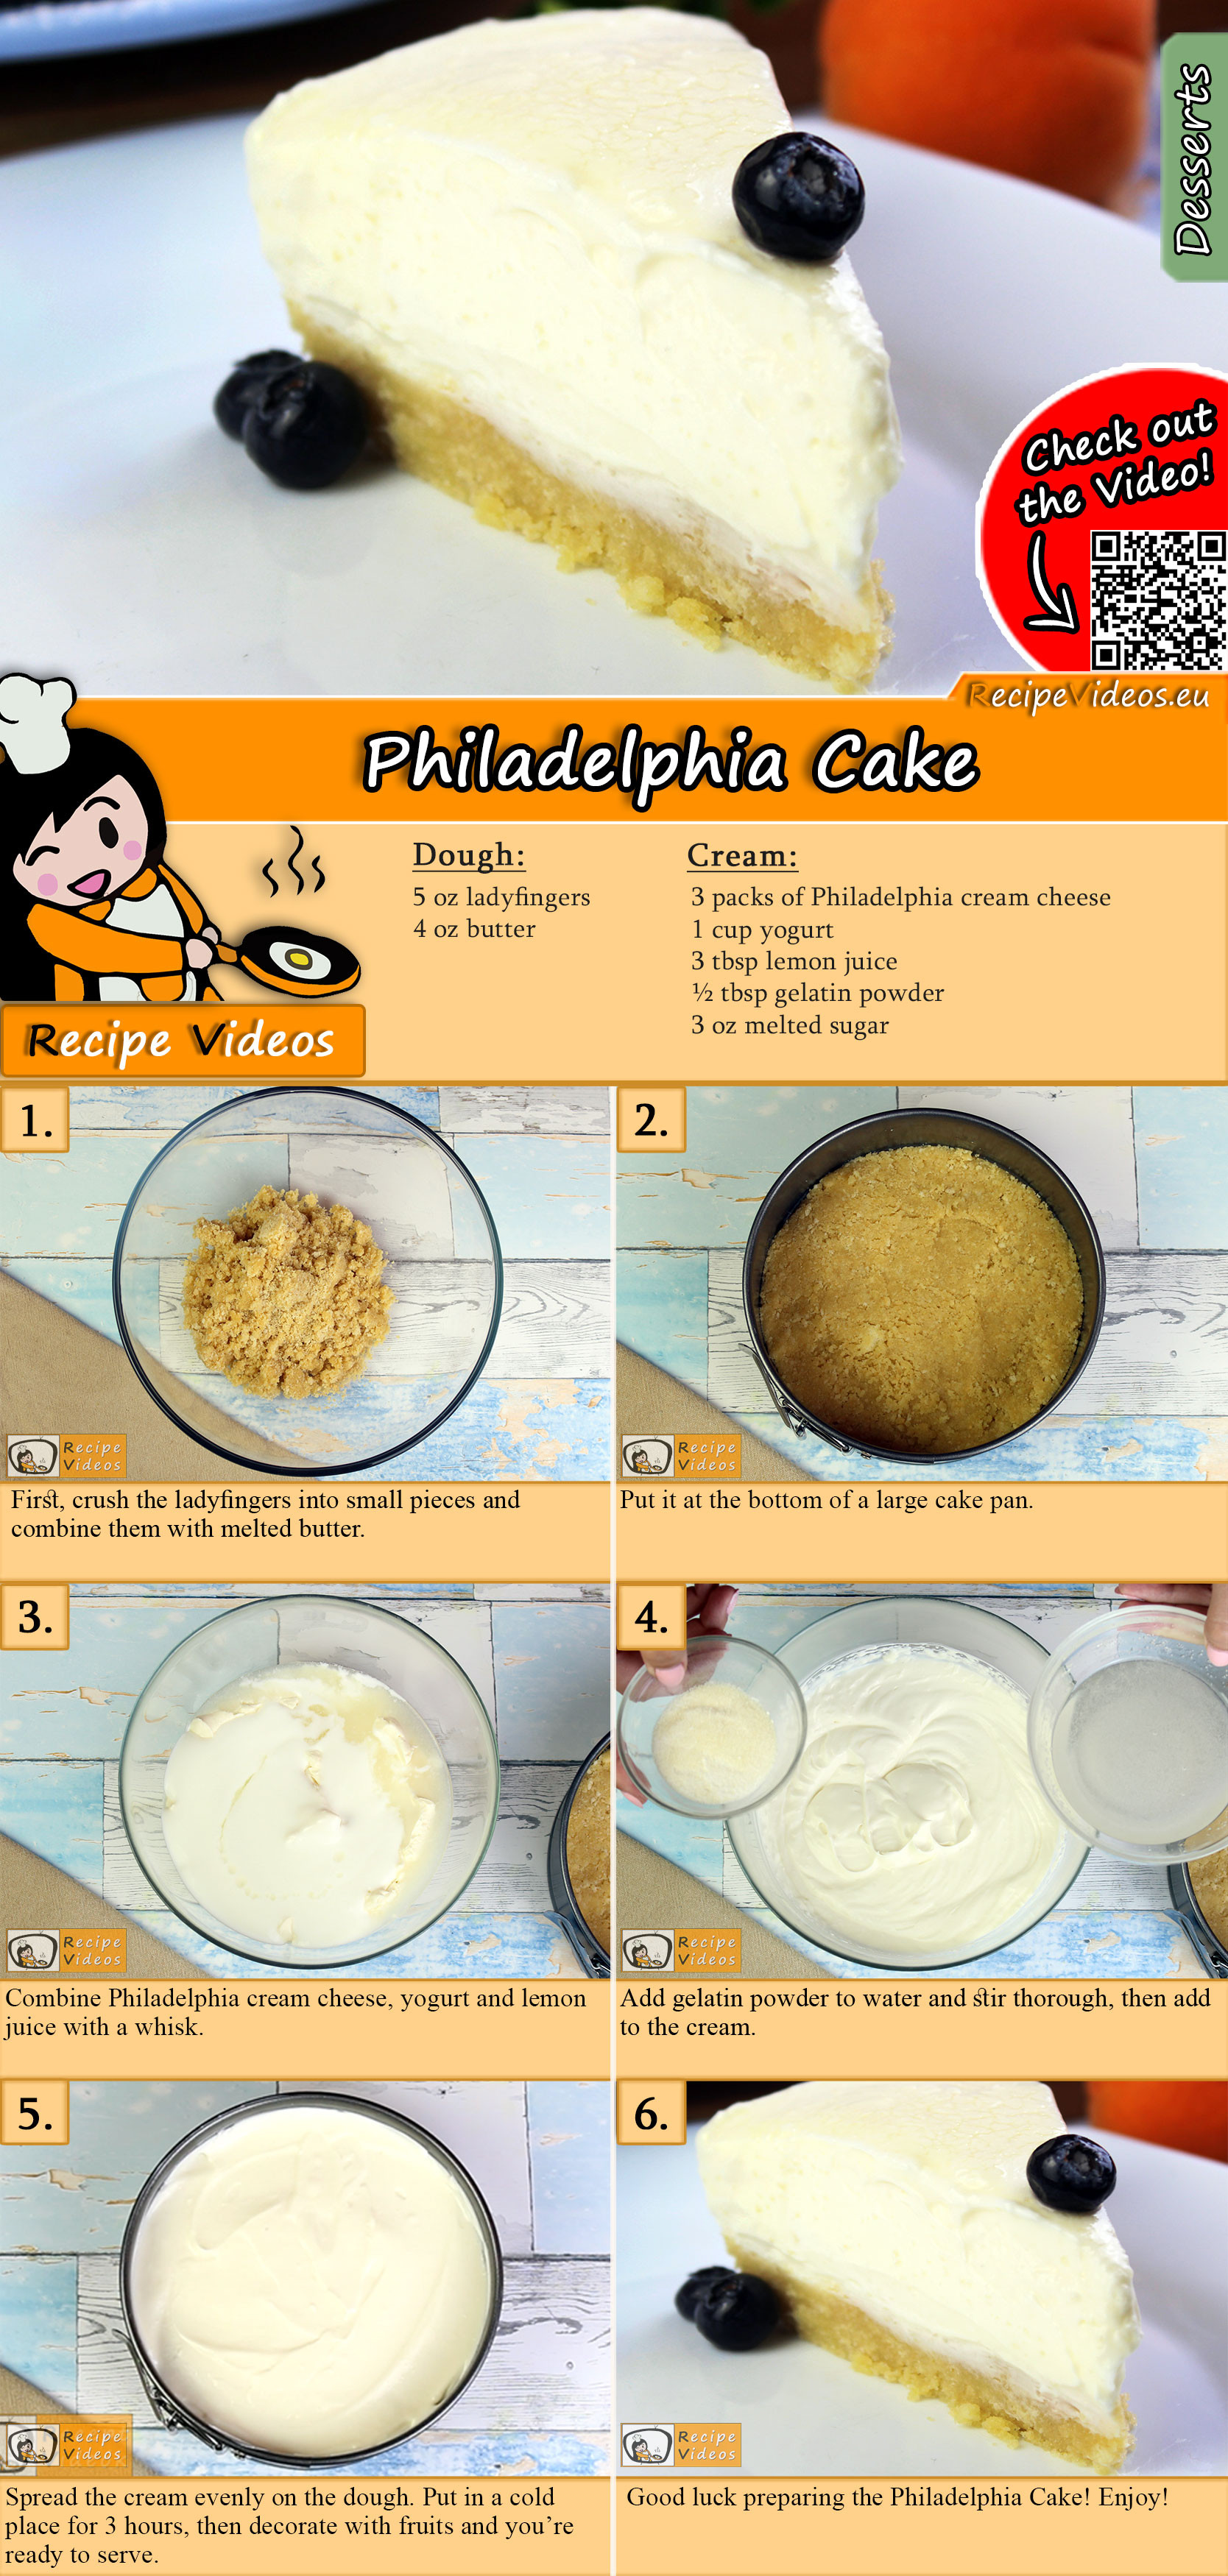 Philadelphia cake recipe with video